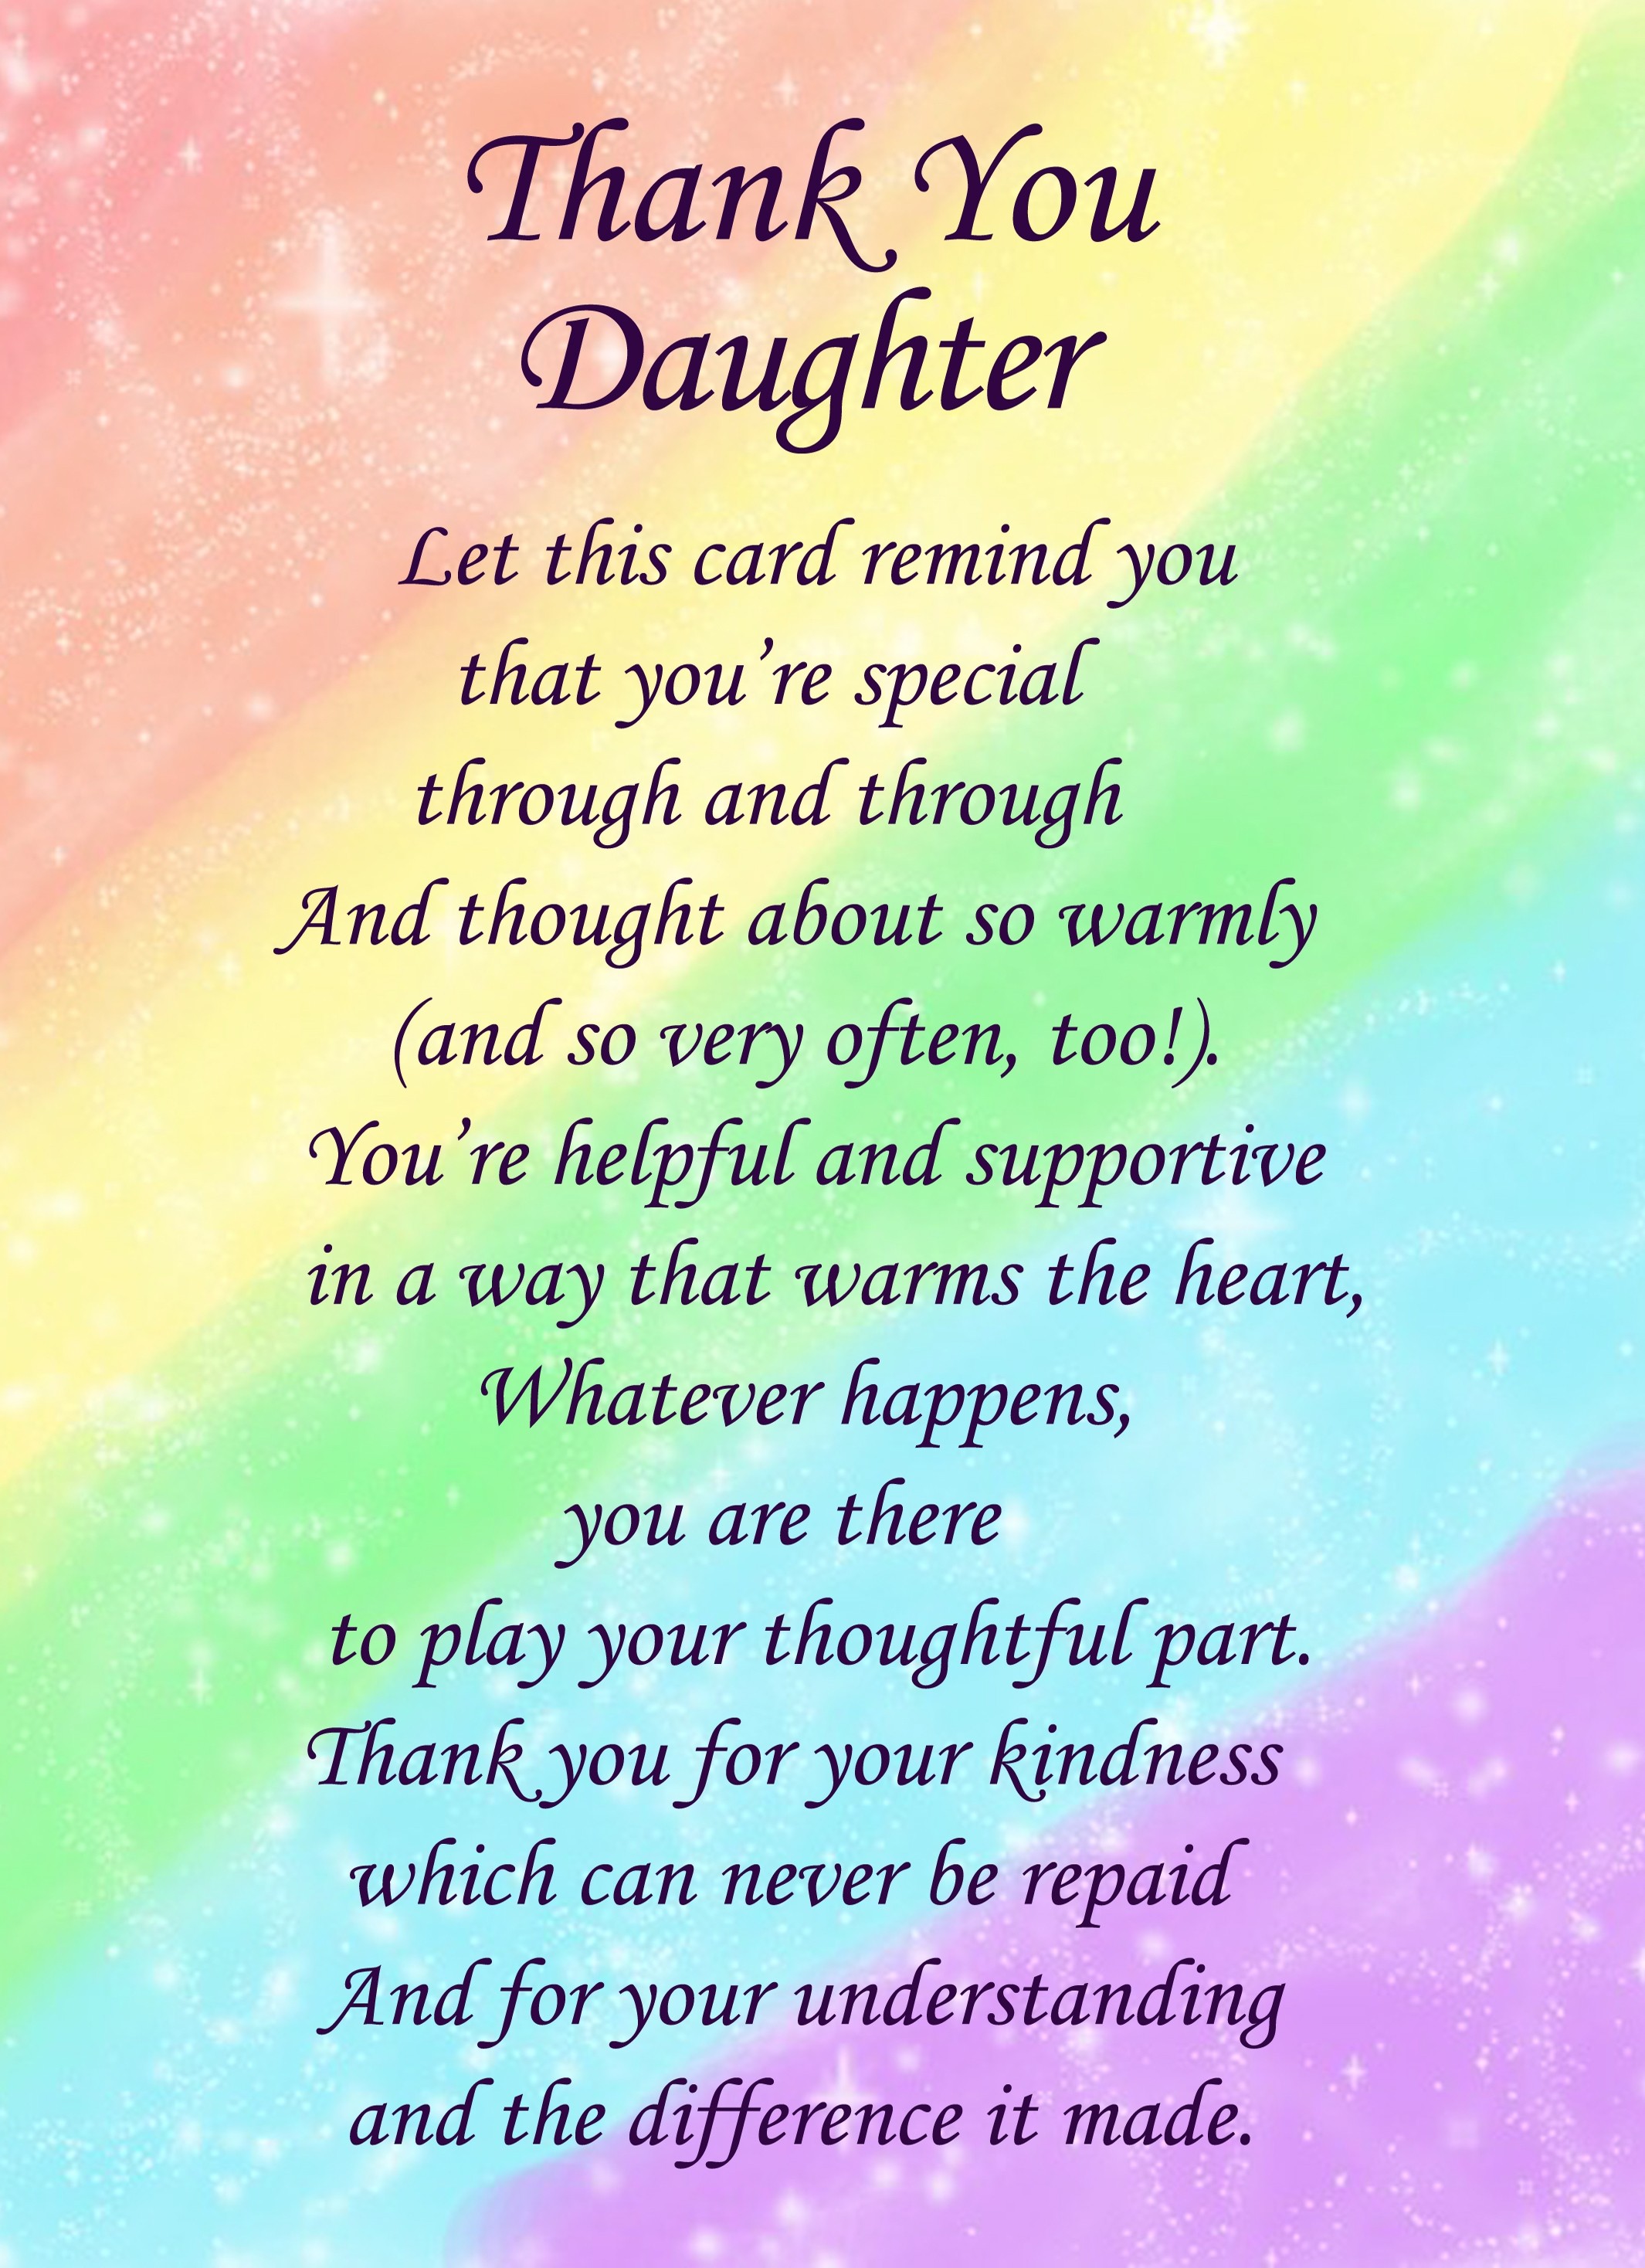 Thank You 'Daughter' Poem Verse Greeting Card